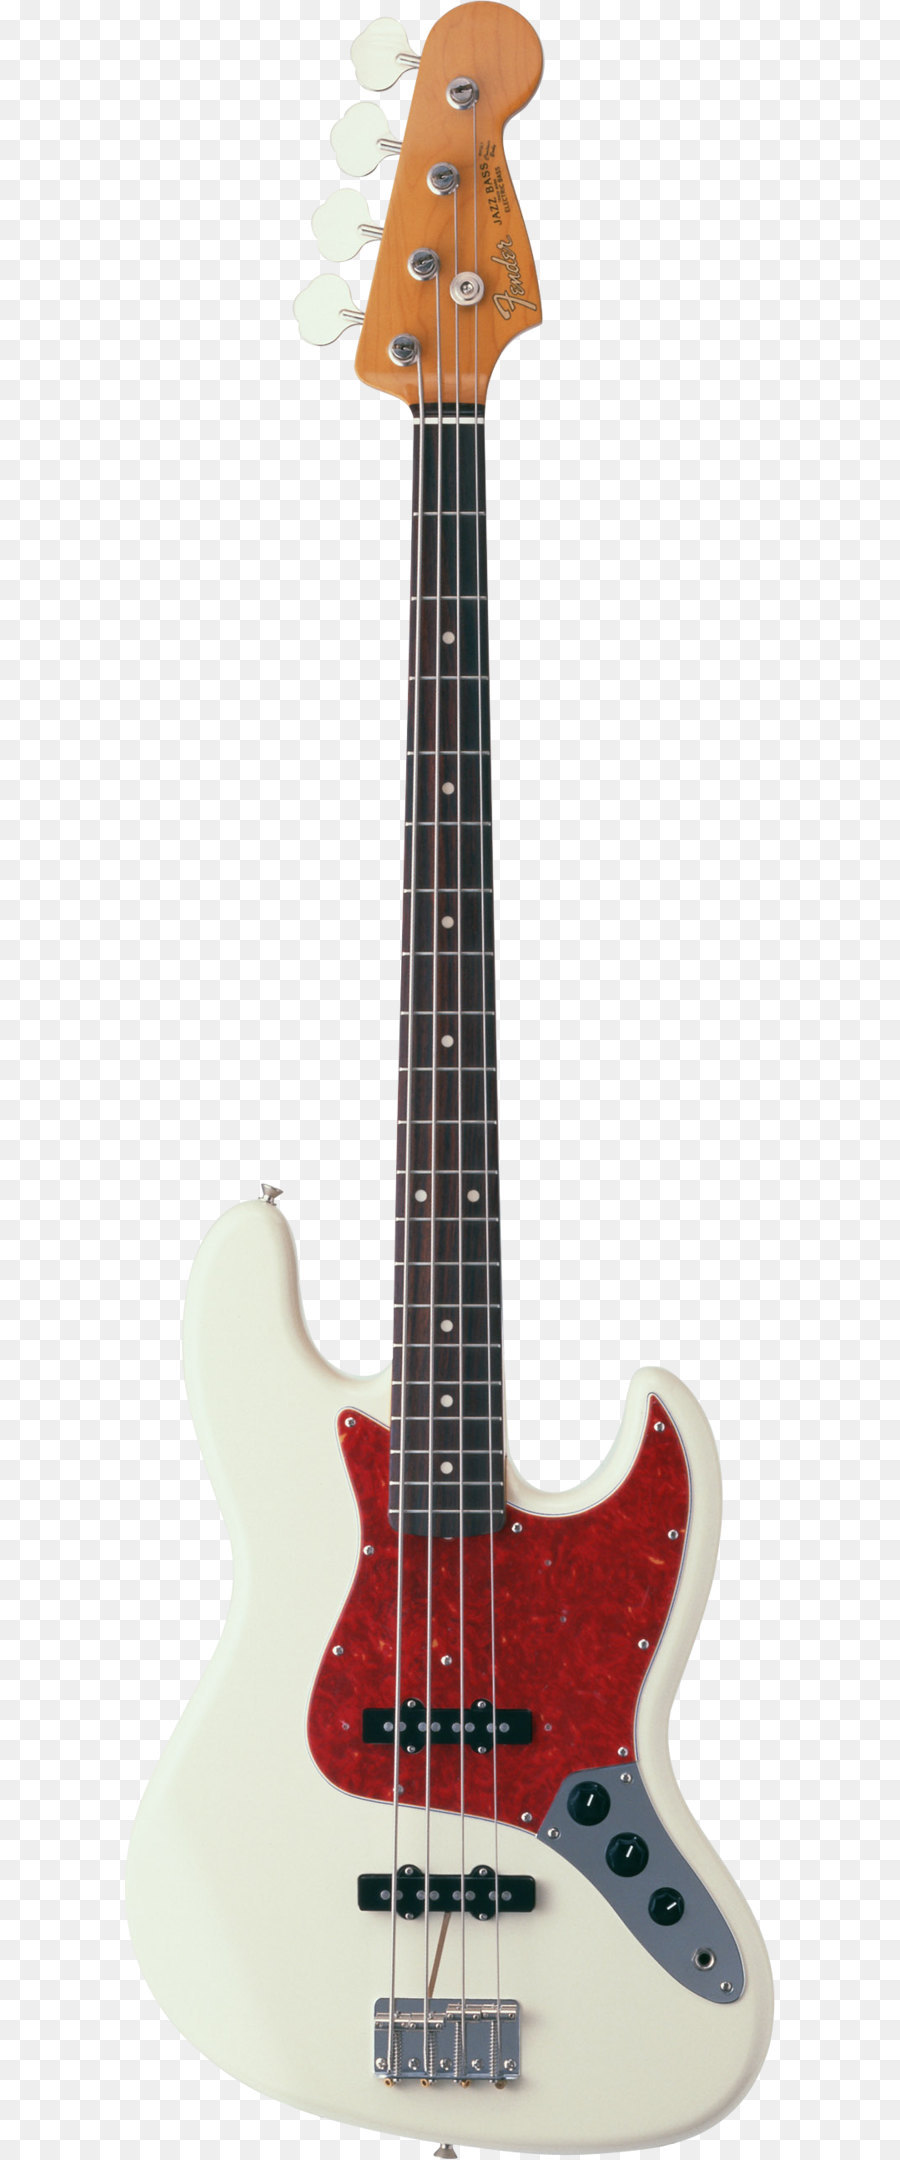 Fender Precision Bass Fender Jaguar Bass Fender Stratocaster guitar Fender Jazz Bass - Chitarra elettrica PNG